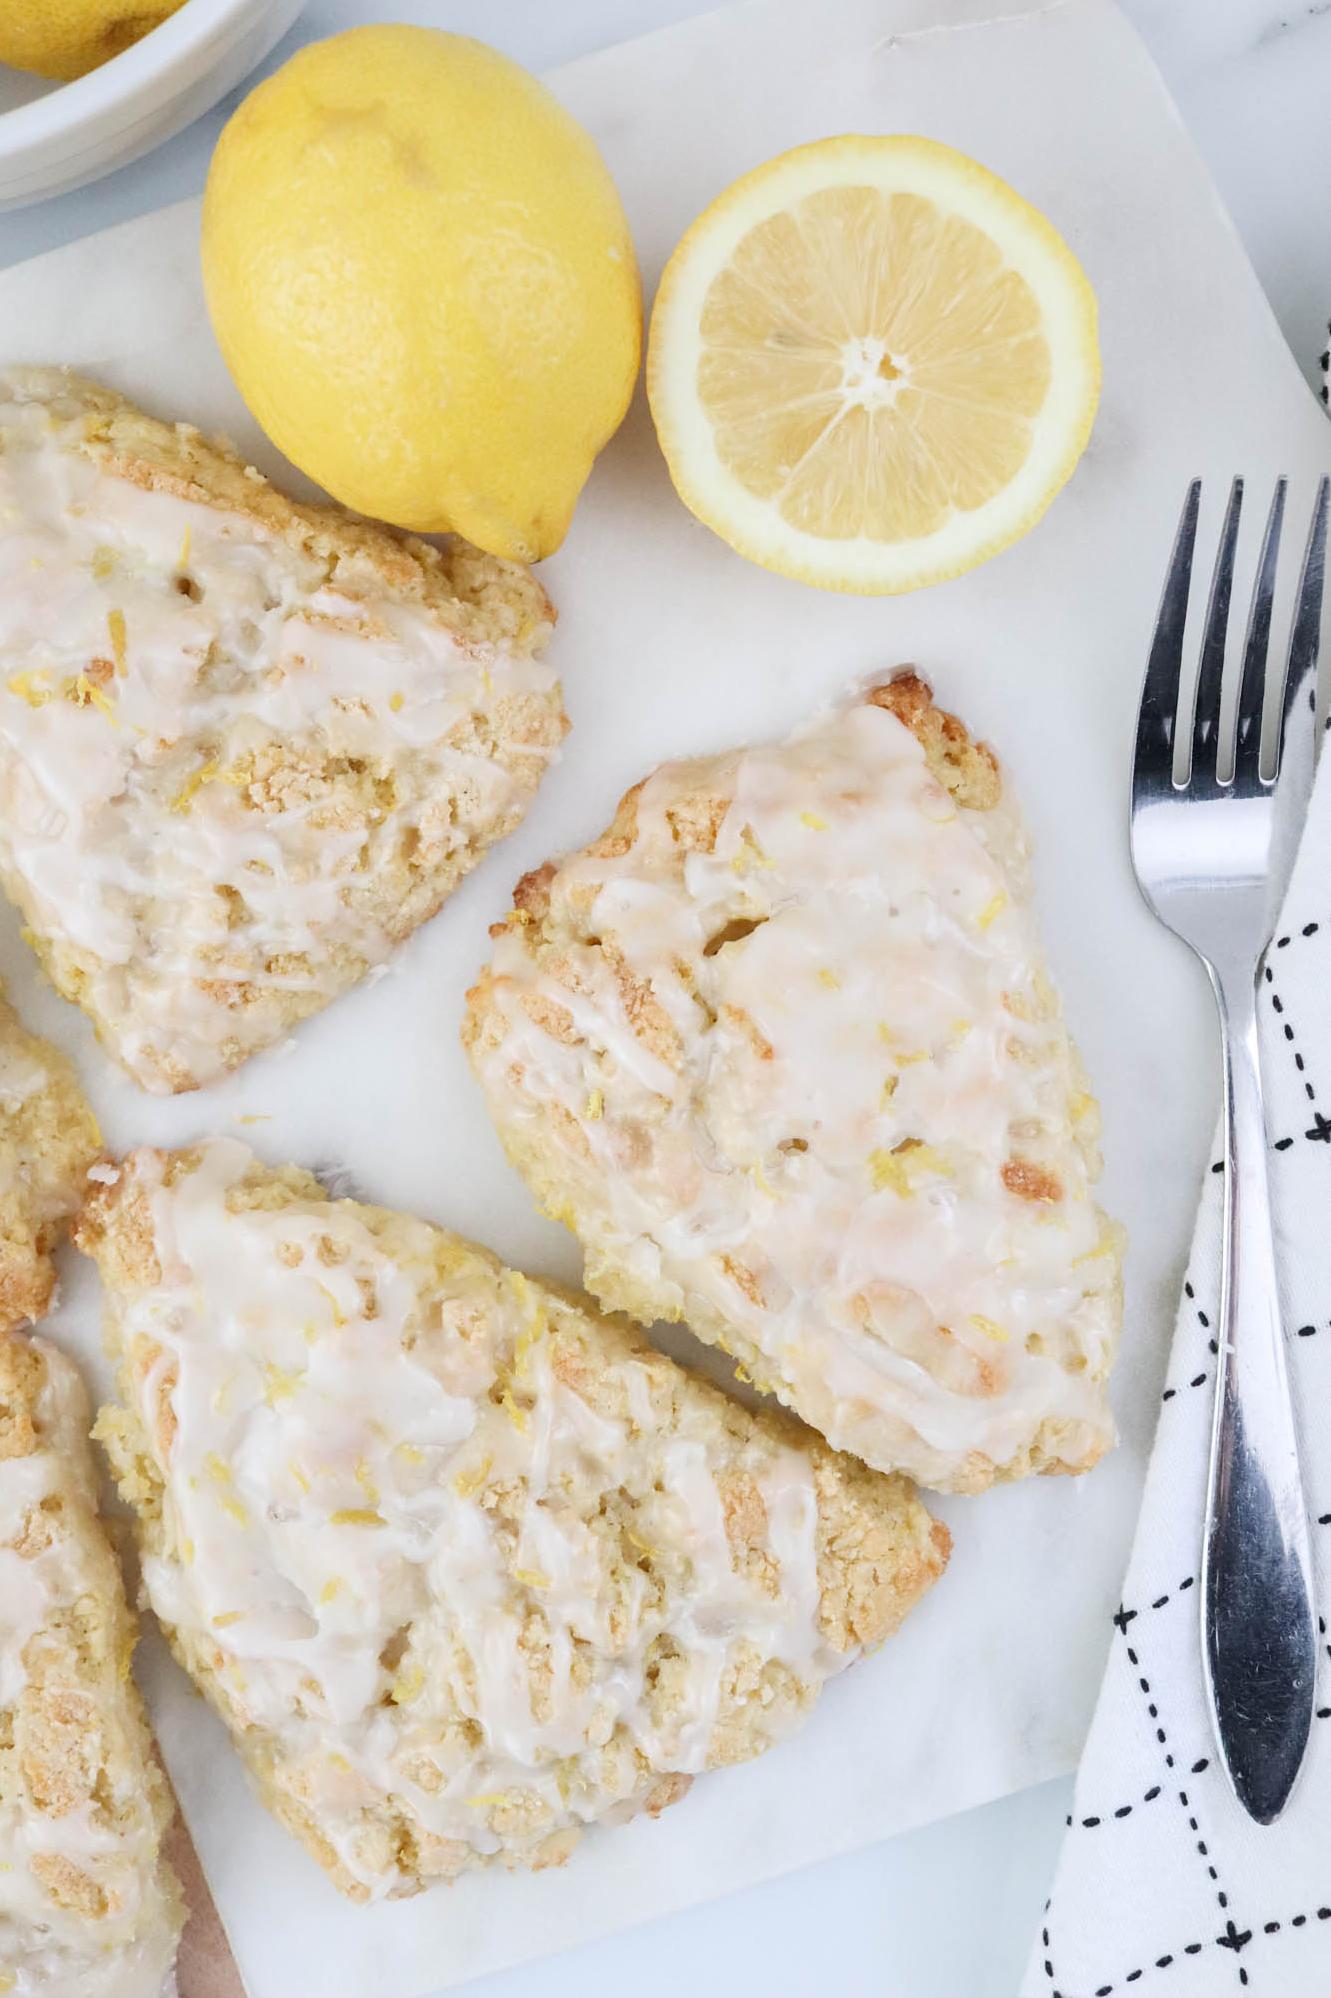  These gluten-free lemon scones will surely brighten up your day!